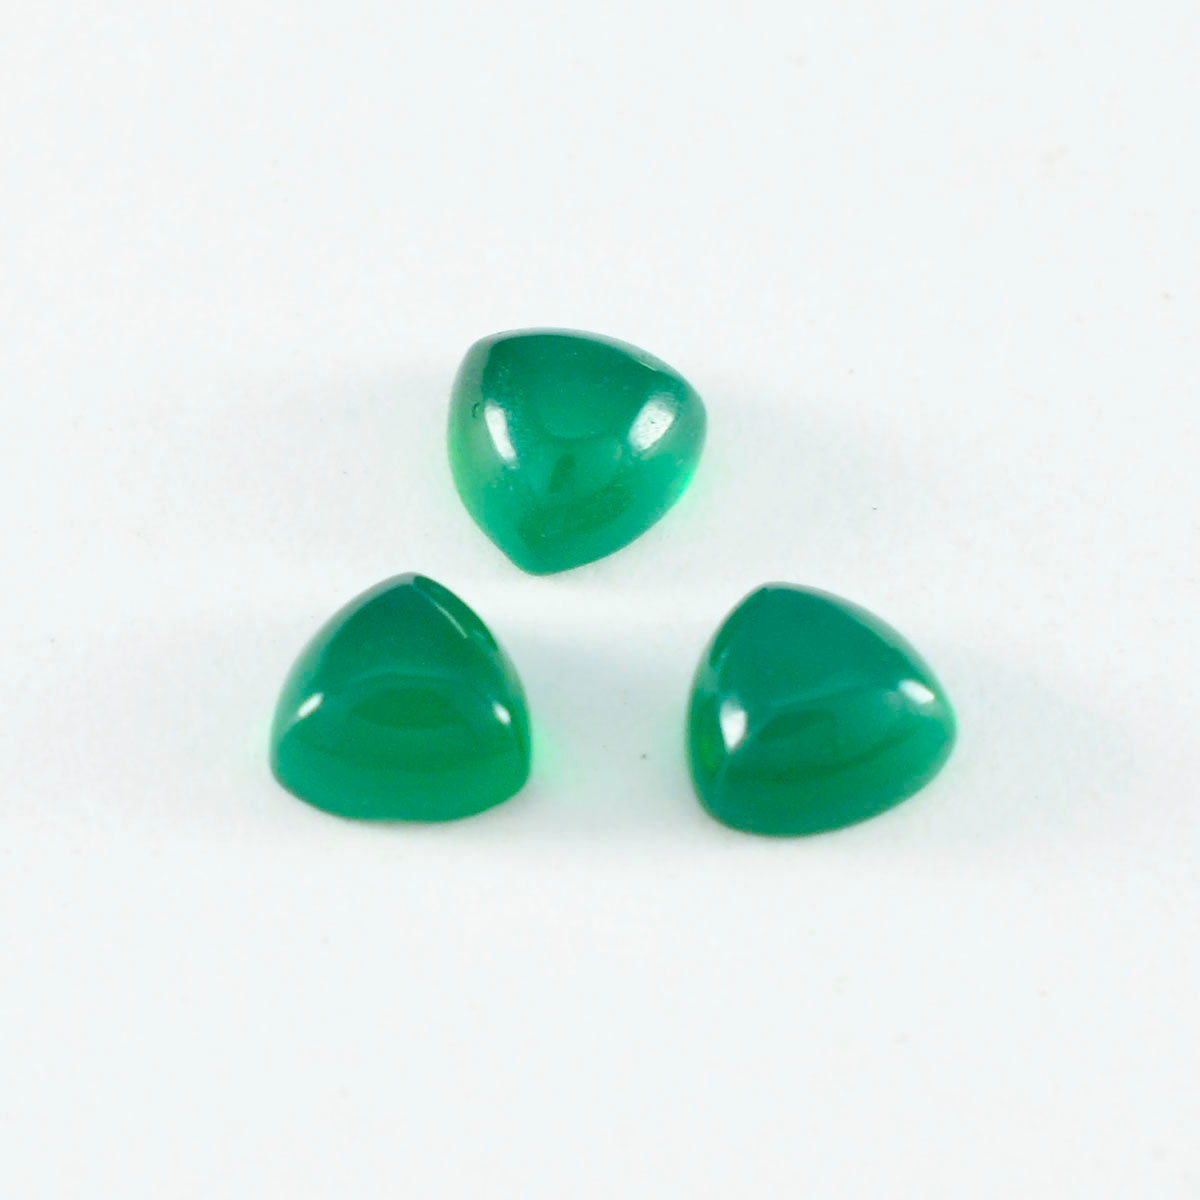 Riyogems 1PC Green Onyx Cabochon 11x11 mm Trillion Shape sweet Quality Loose Stone